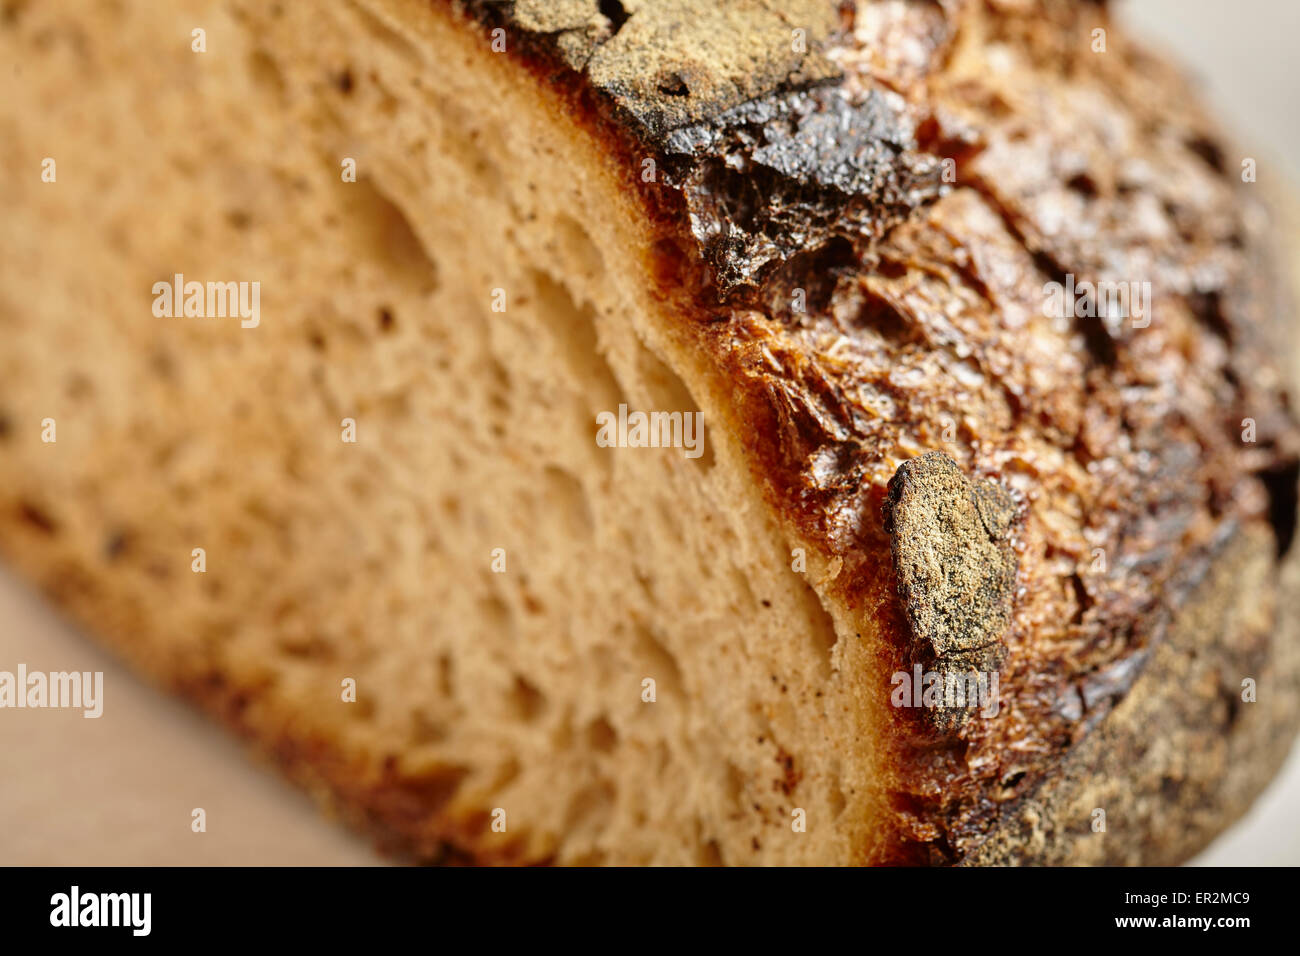 modern American whole grain artisan bread Stock Photo